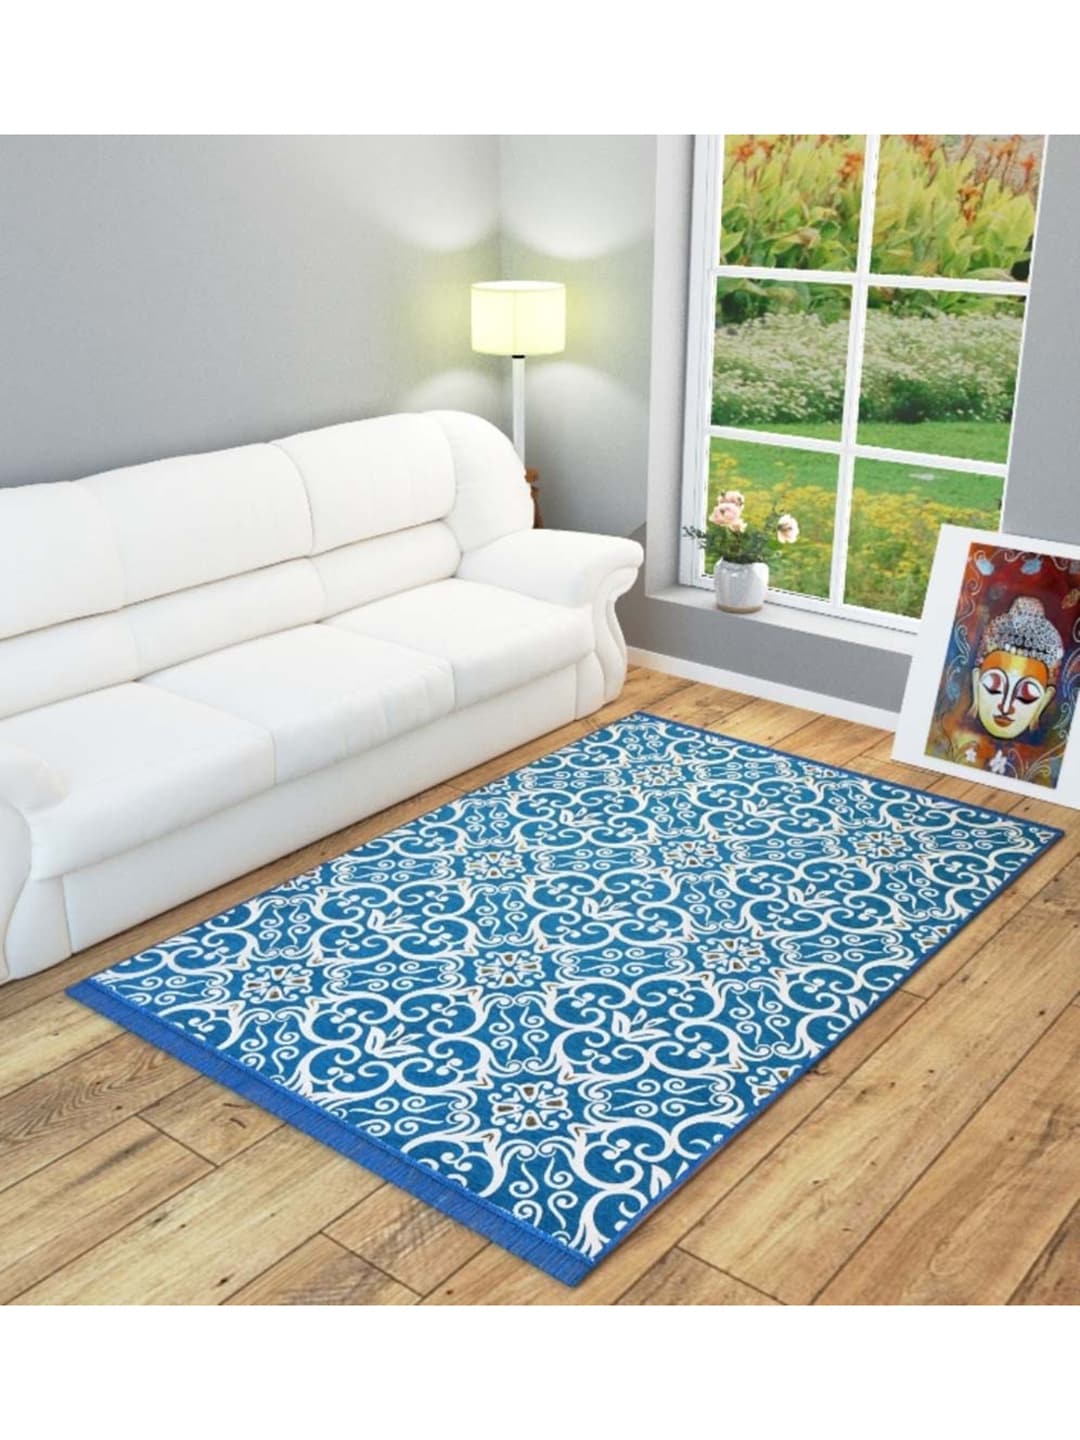 Slushy Mushy Adults Blue Floral Printed Modern Carpet Price in India